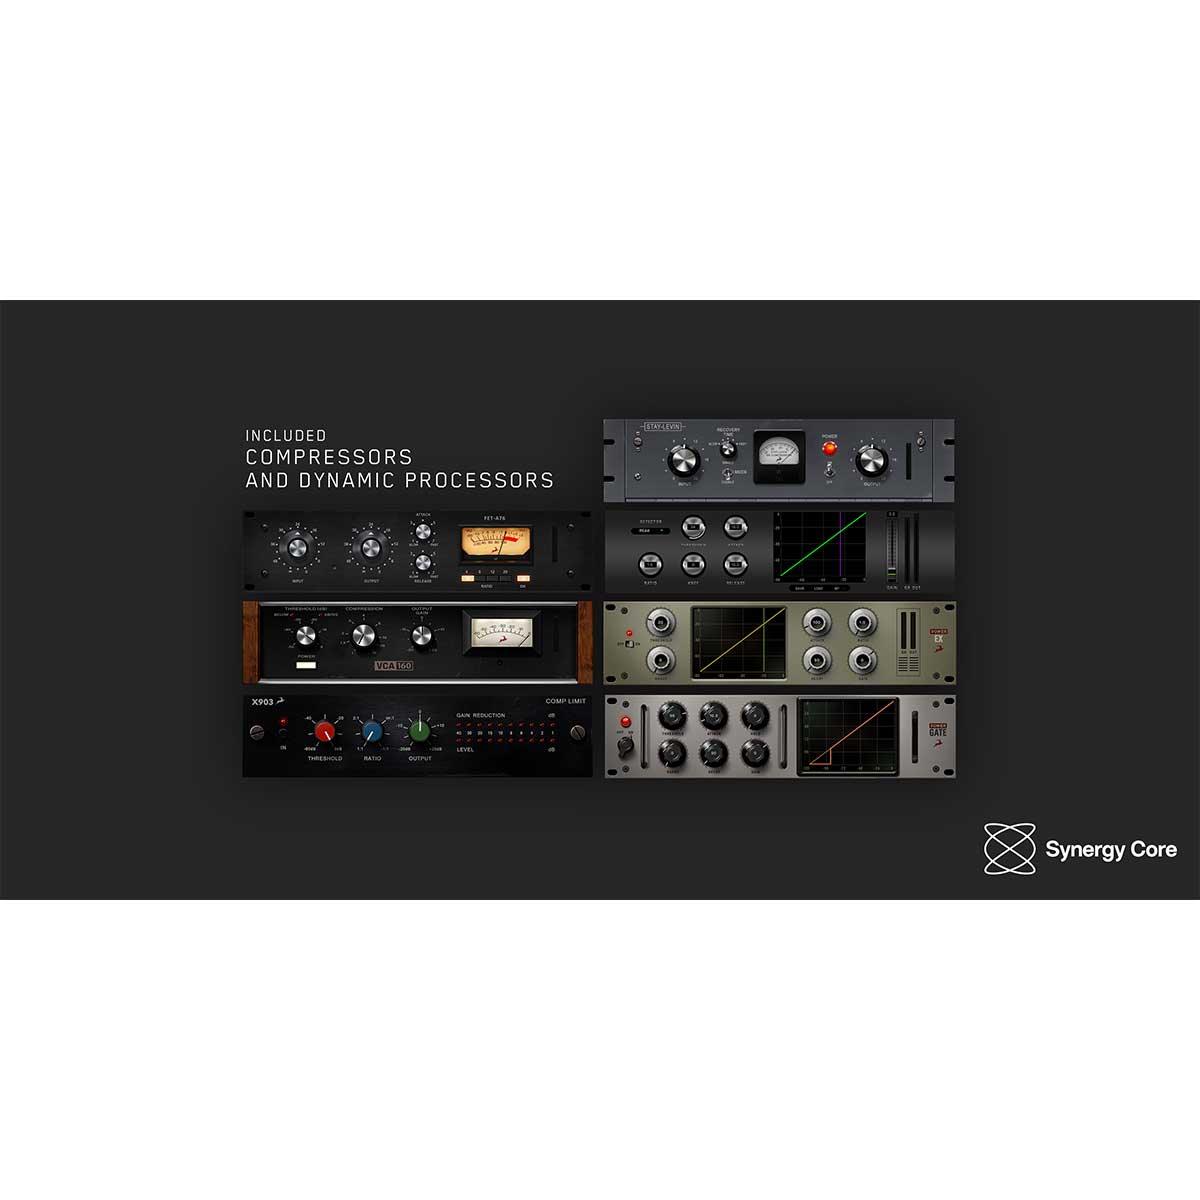 Antelope Audio Zen Q Synergy Core 14x10 Thunderbolt 3 Audio interface with FREE Bonus Softcase - Koala Audio